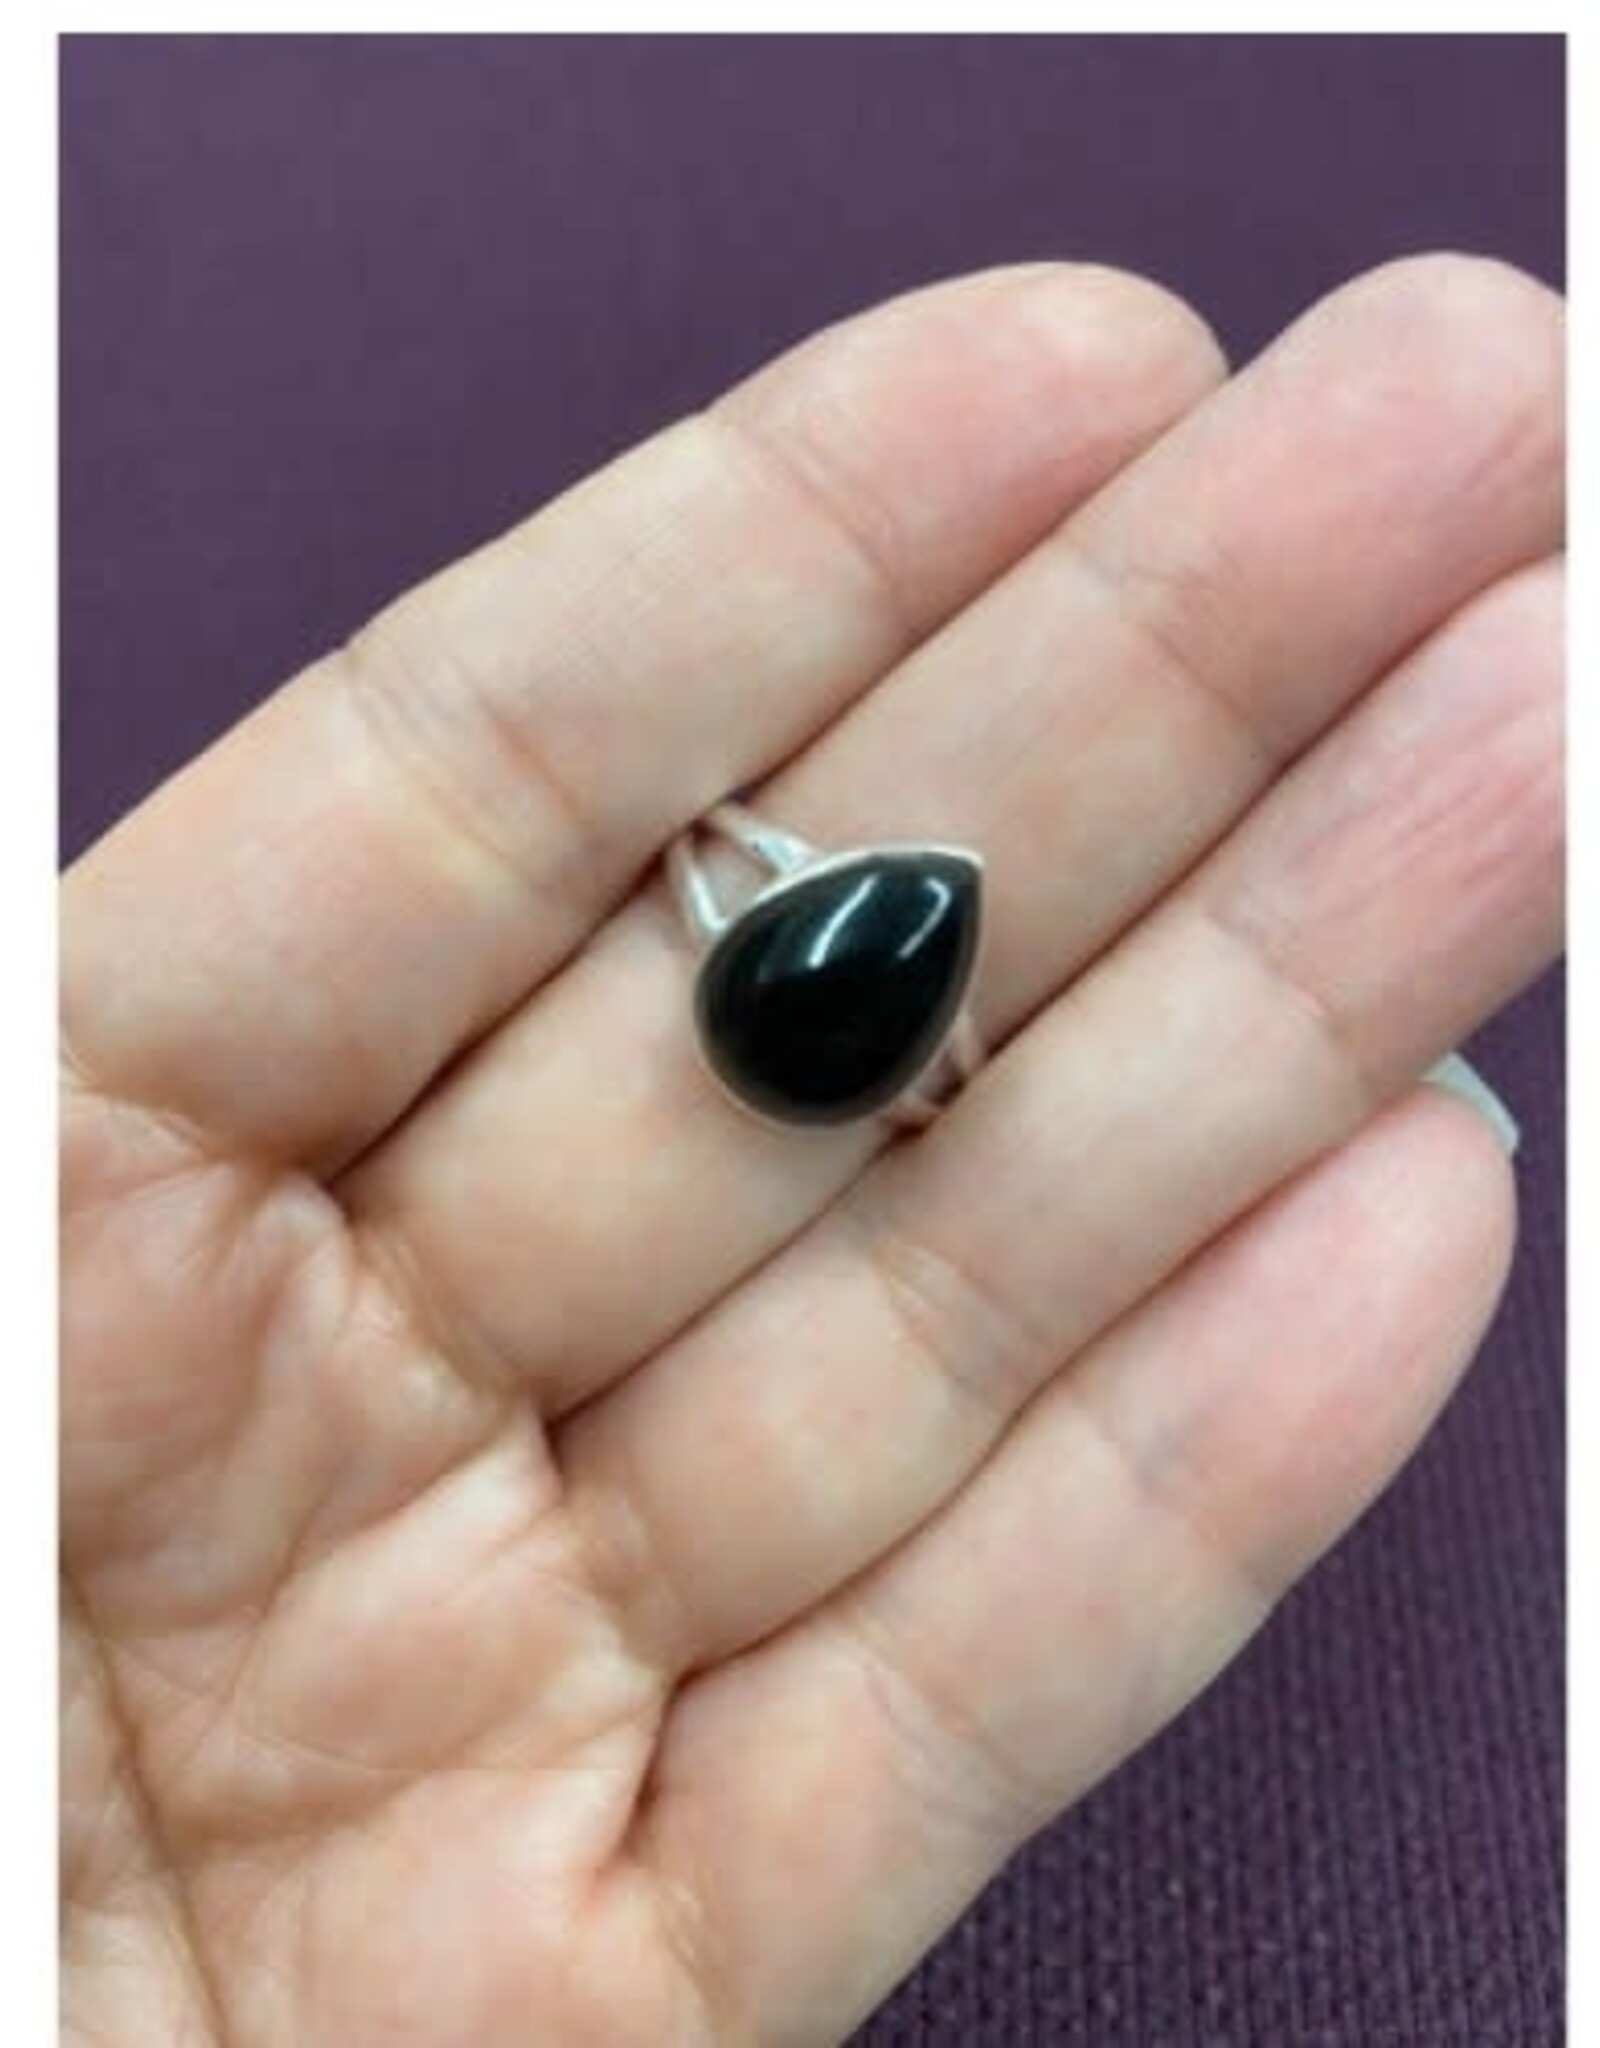 Black Obsidian Ring - Size 9 Sterling Silver